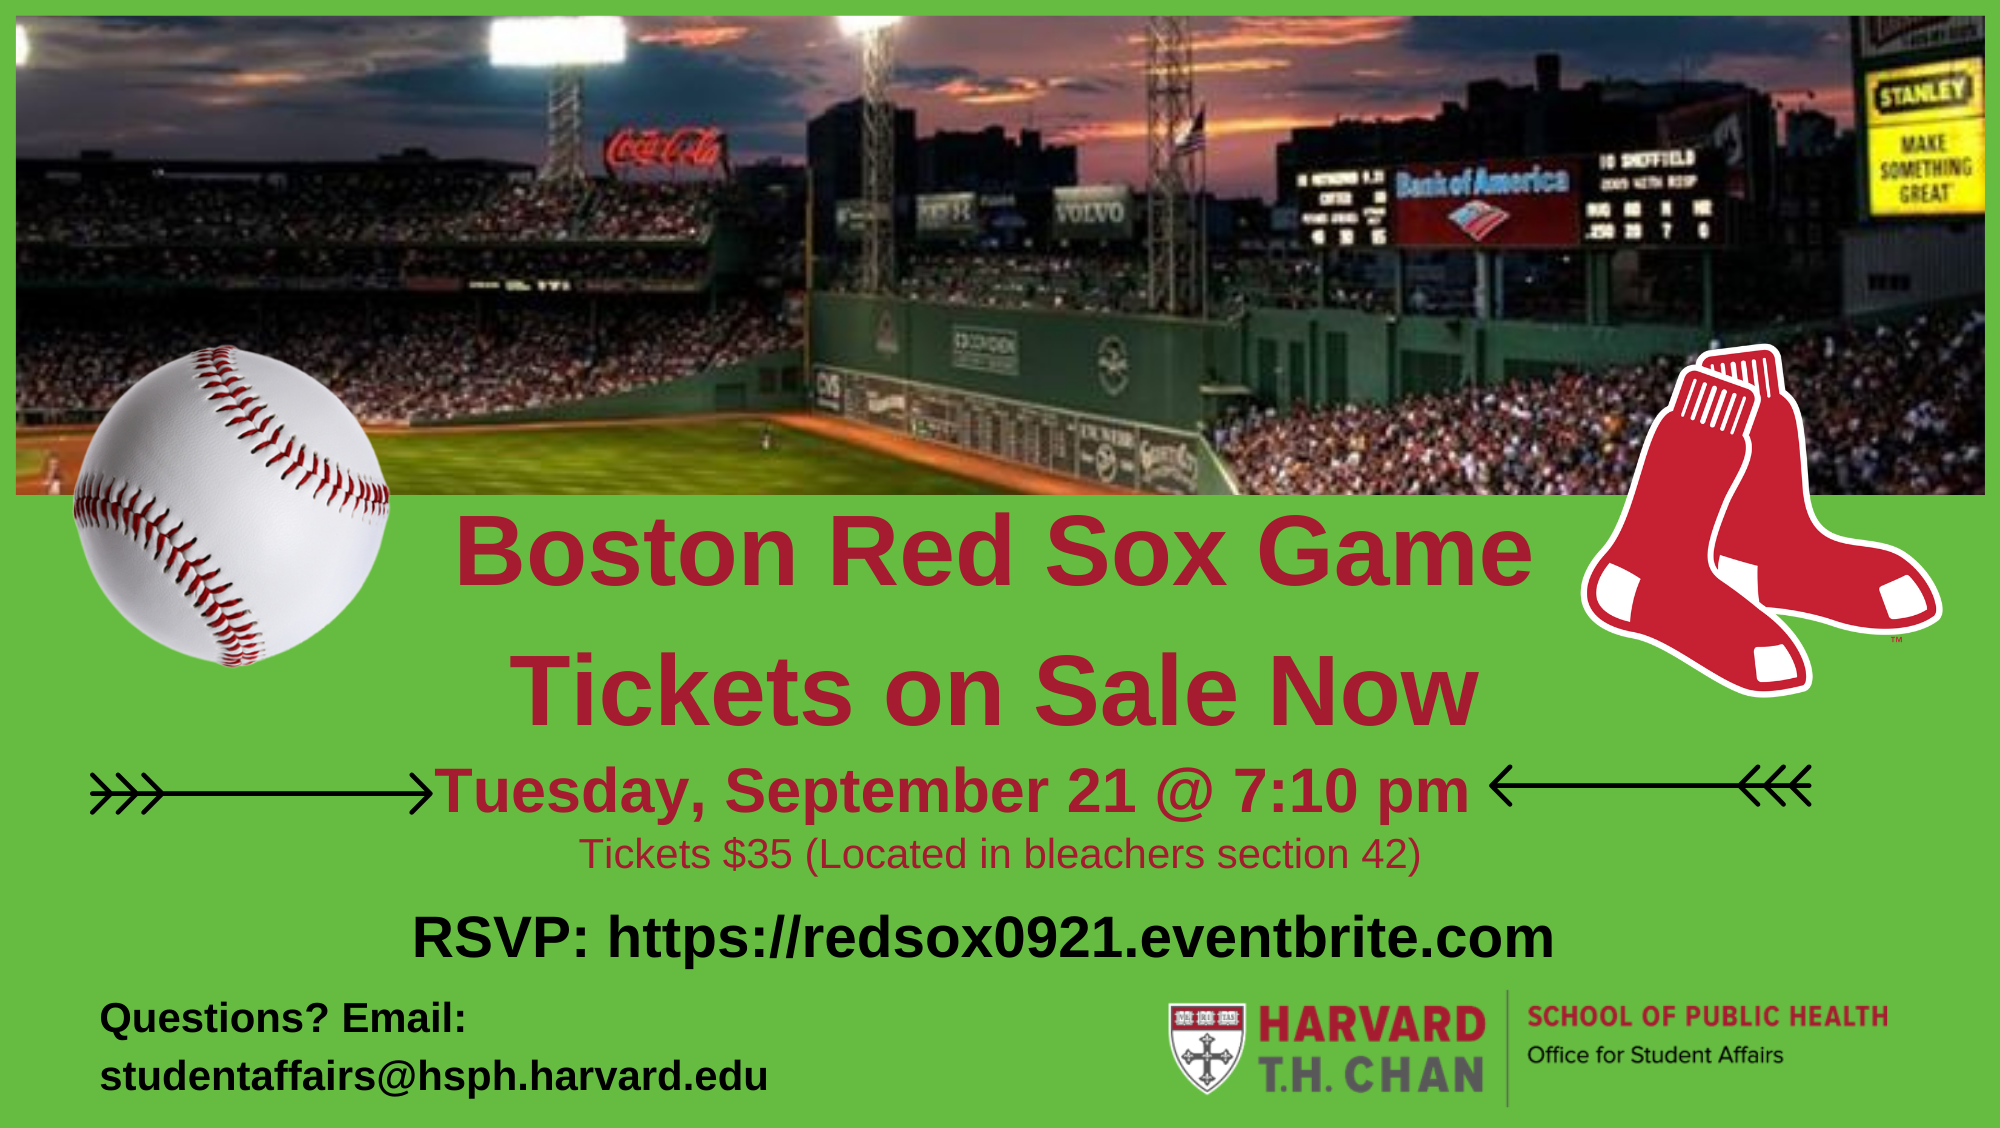 Harvard Chan Boston Red Sox Night